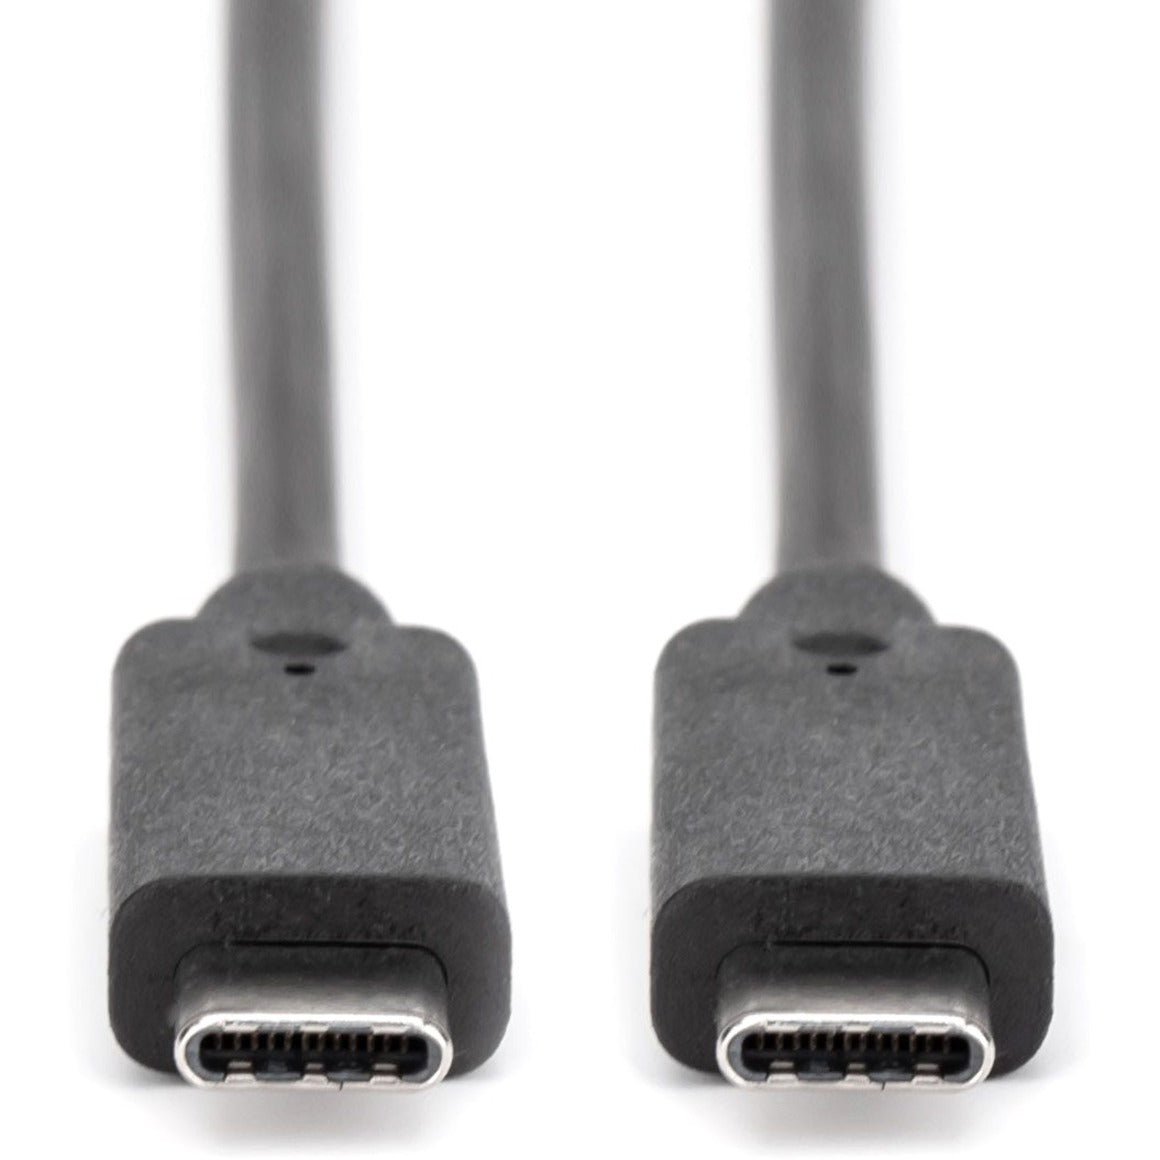 Rocstor Y10C148-B1 كبل نقل البيانات USB المميز، 3 قدم، USB 3.1 Gen2 10GB، قابل للعكس، أسود